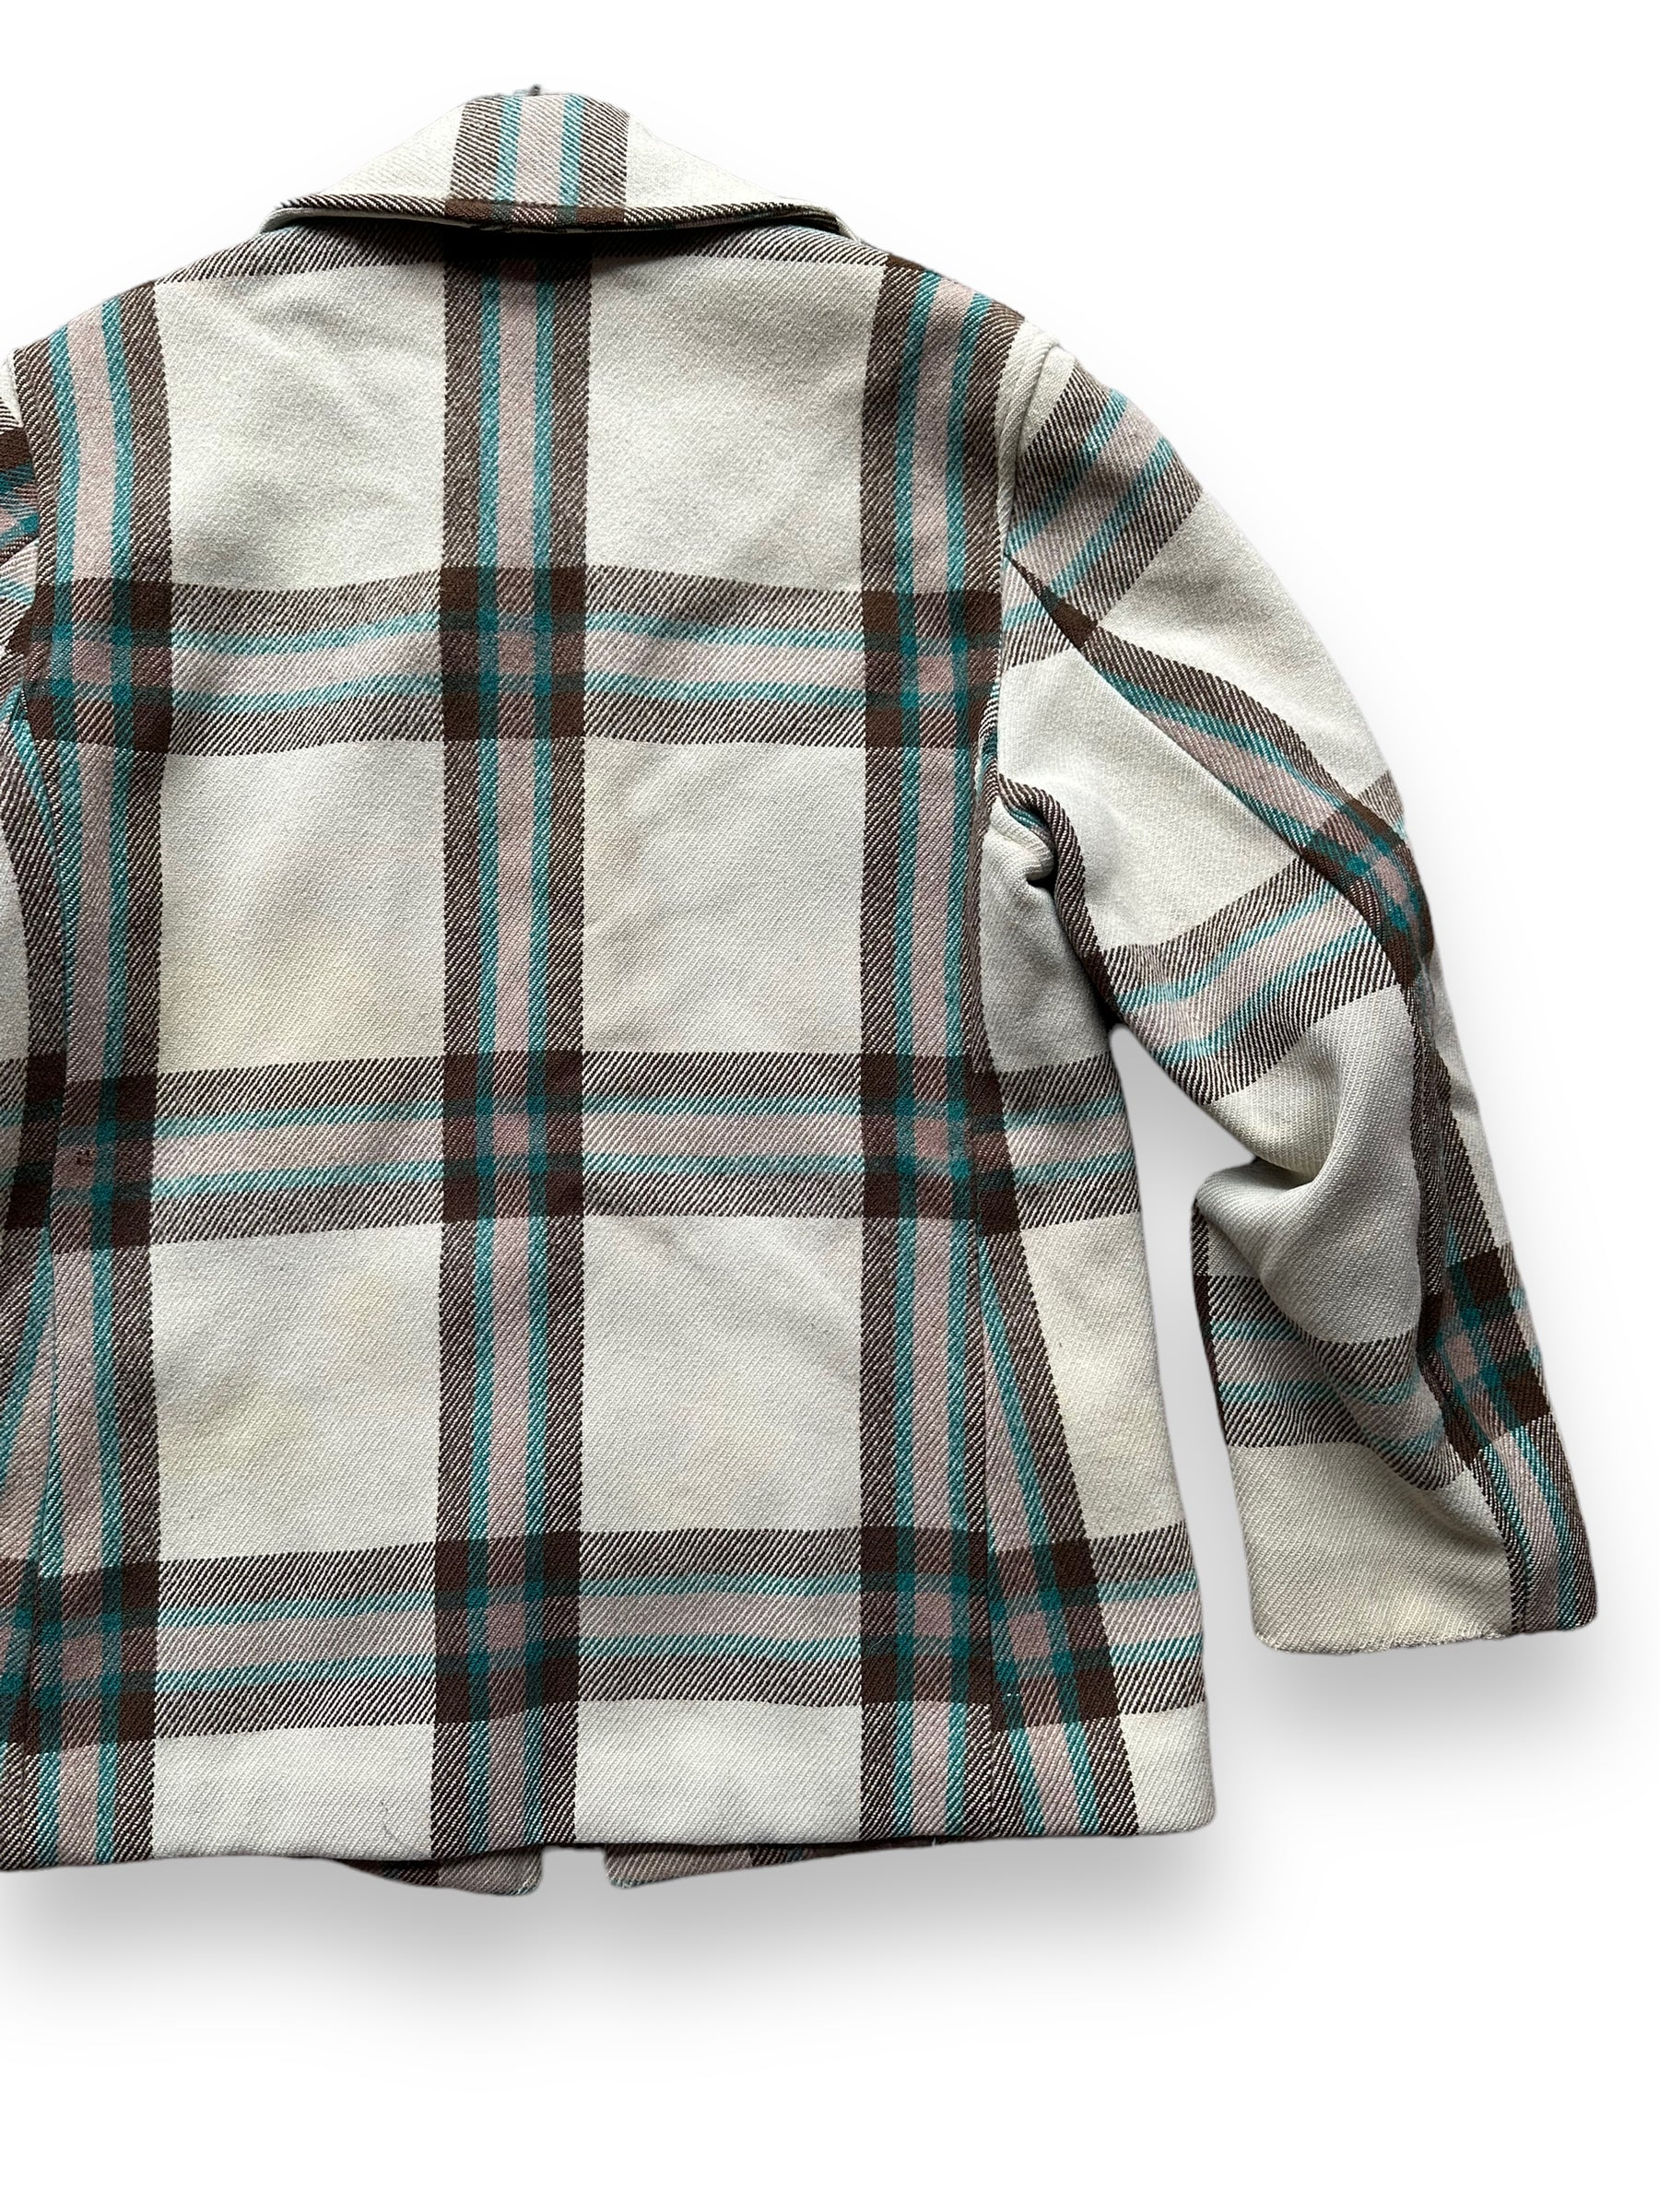 Right Rear View on Vintage Merrill Woolen Mills Jacket SZ L |  Barn Owl Vintage Goods | Vintage Wool Coat Seattle